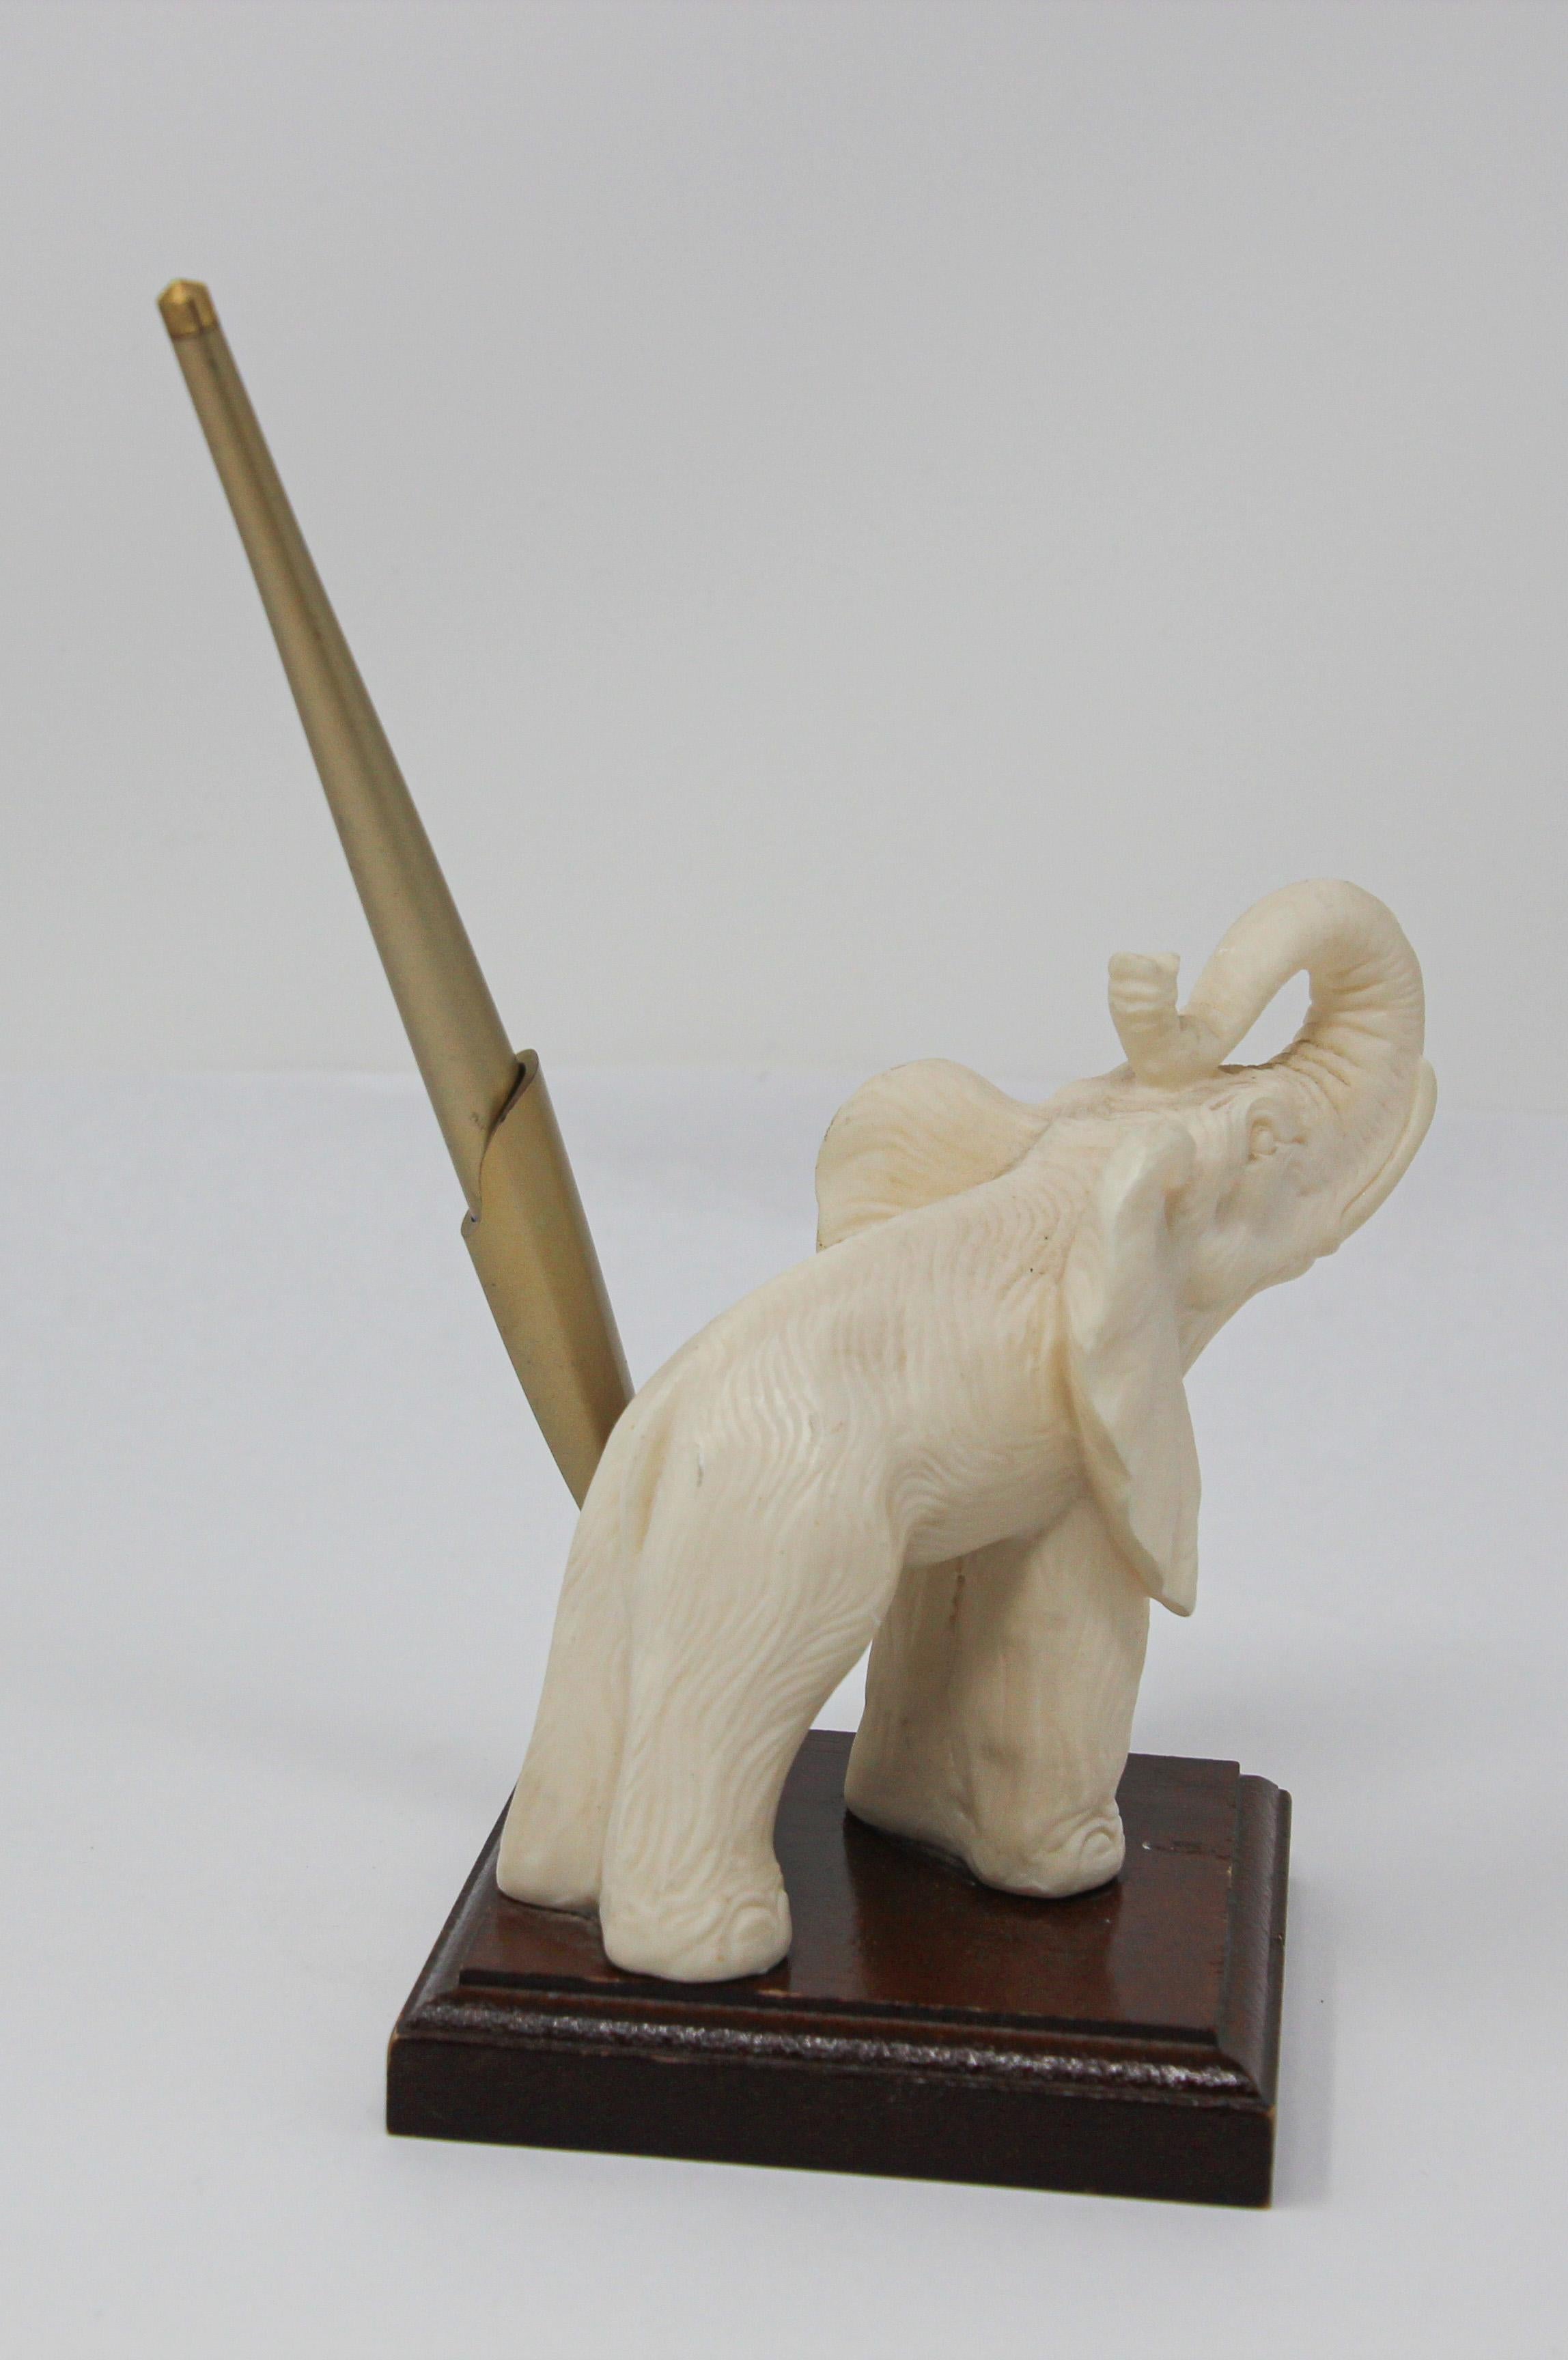 20th Century Vintage White Elephant Sculpture Pen Holder, Jaipur, Rajasthan India For Sale